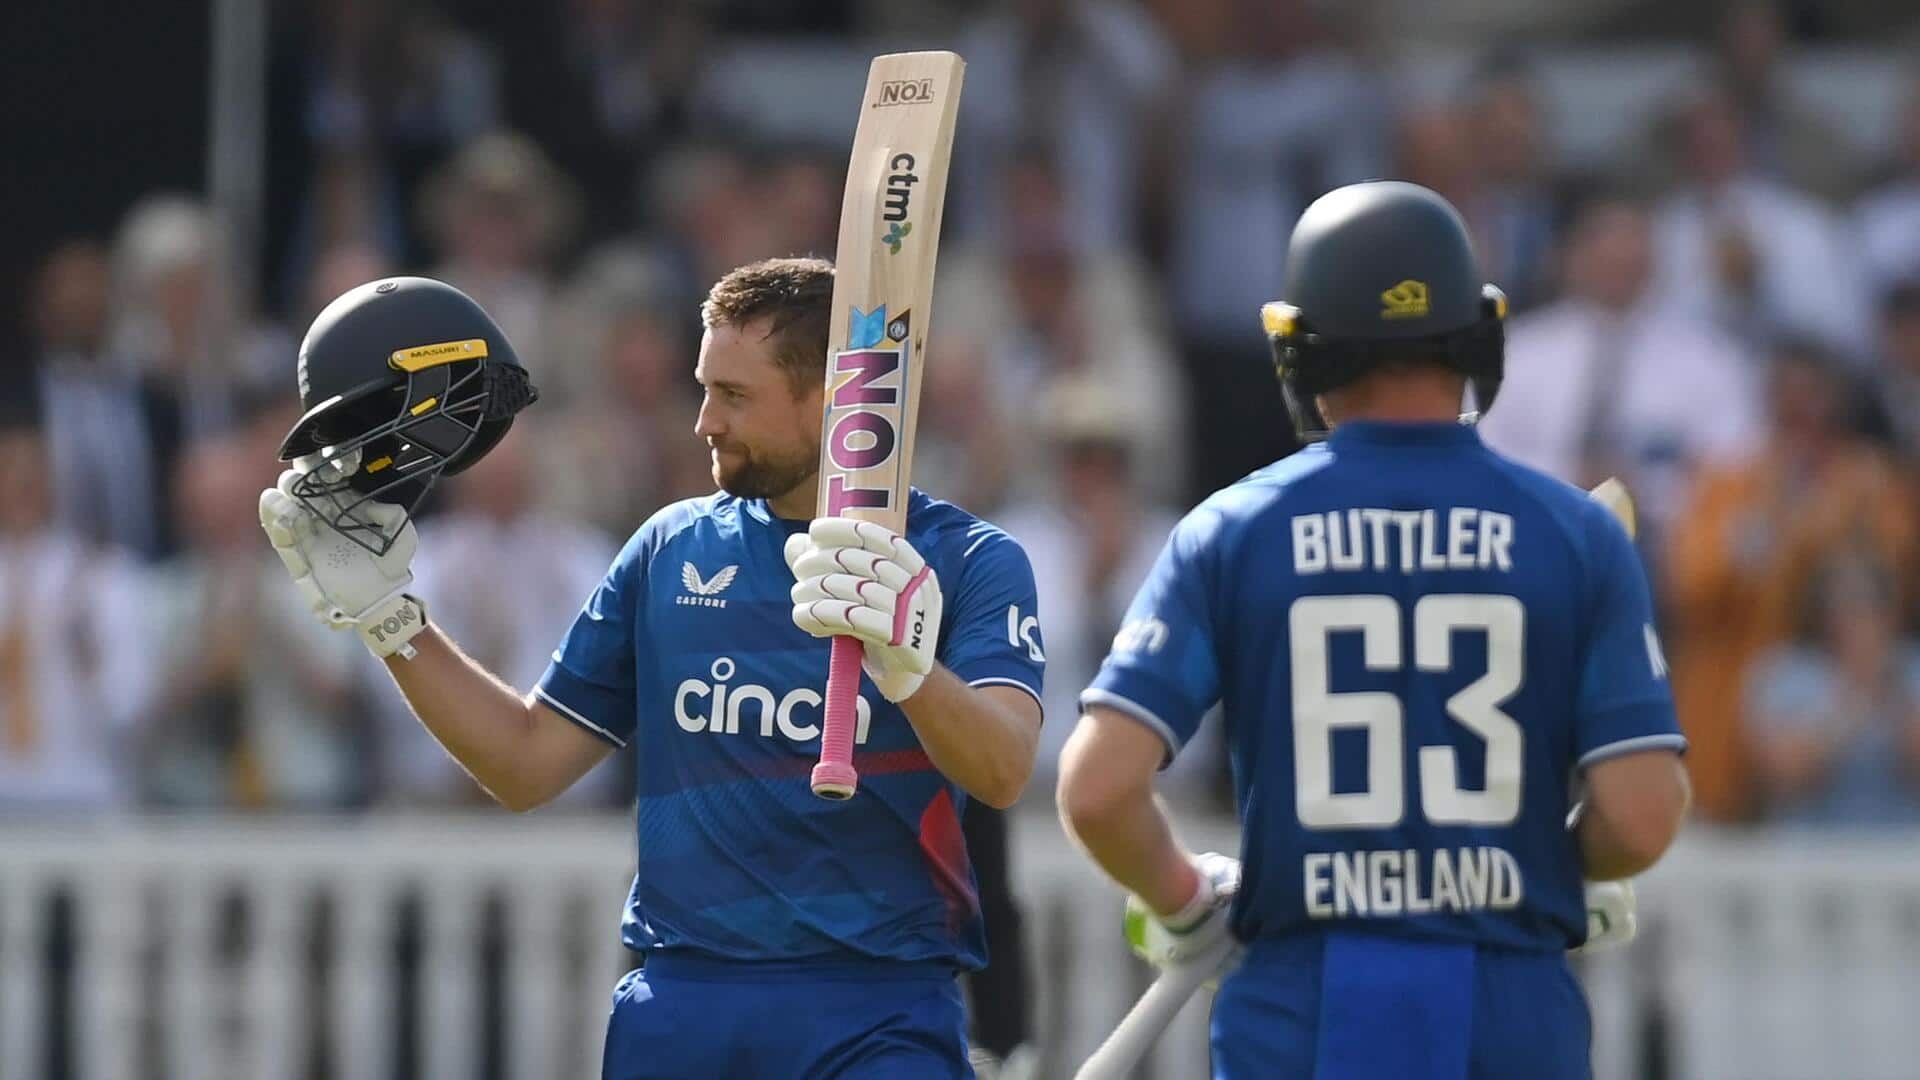 England humble New Zealand, win ODI series 3-1: Key stats